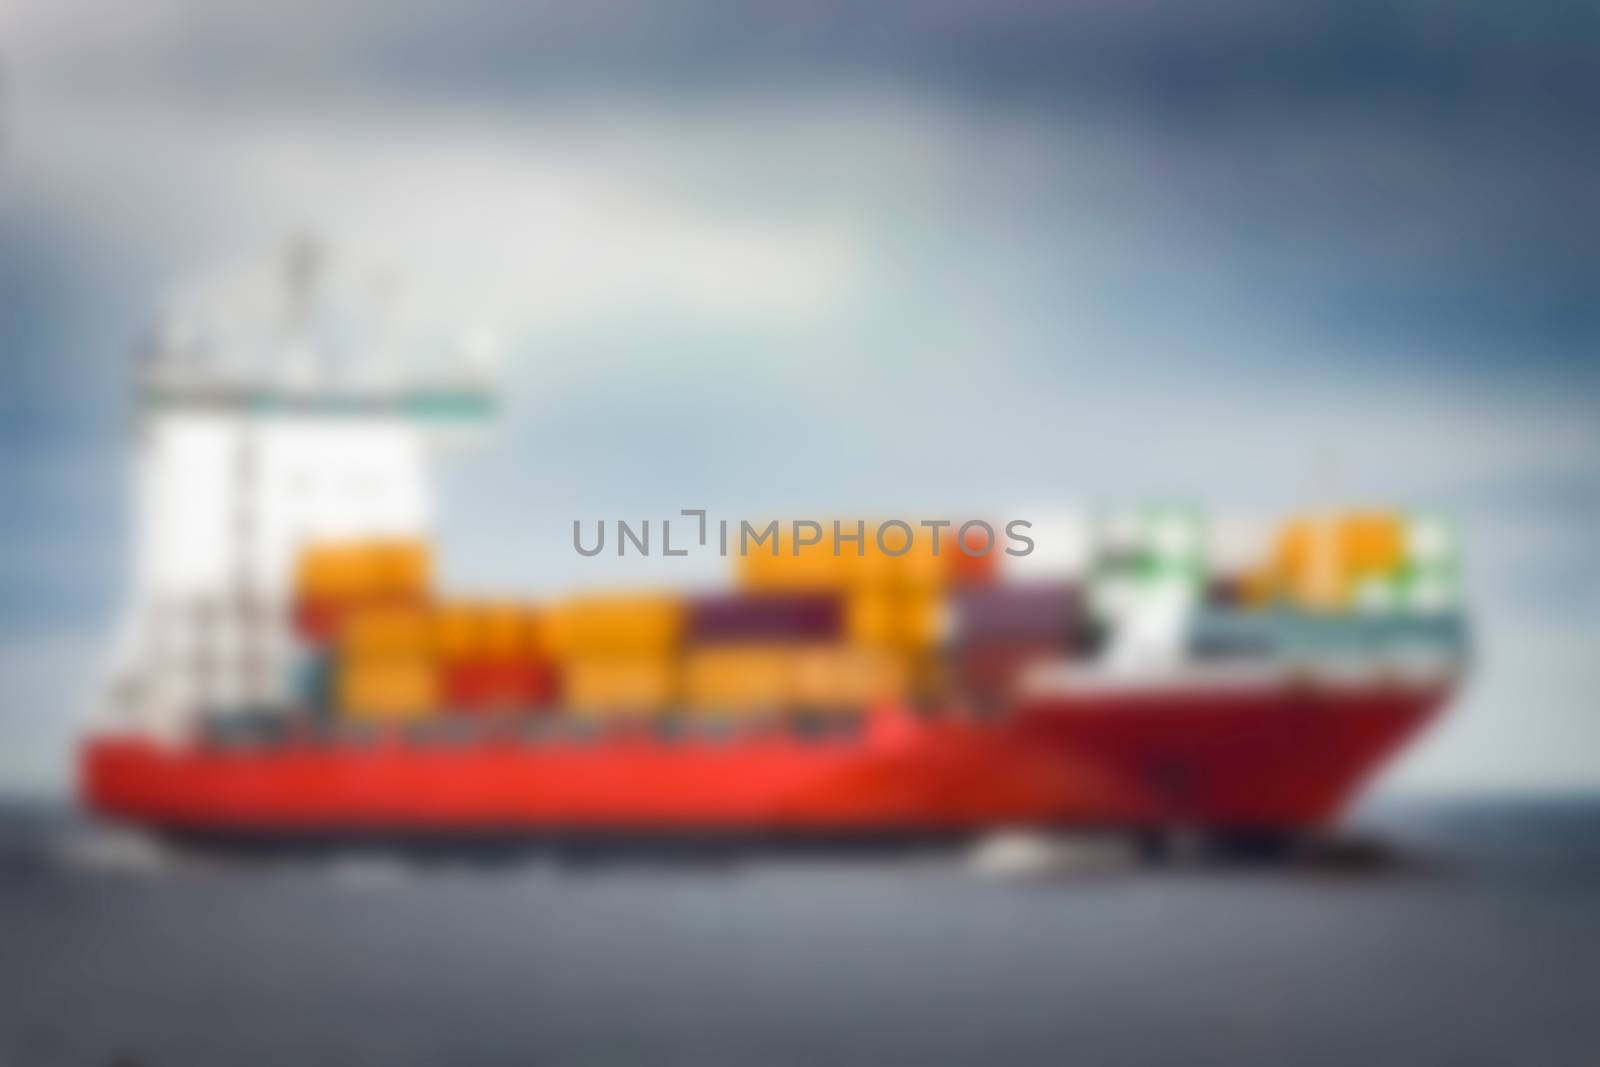 Cargo ship - blurred image by sengnsp